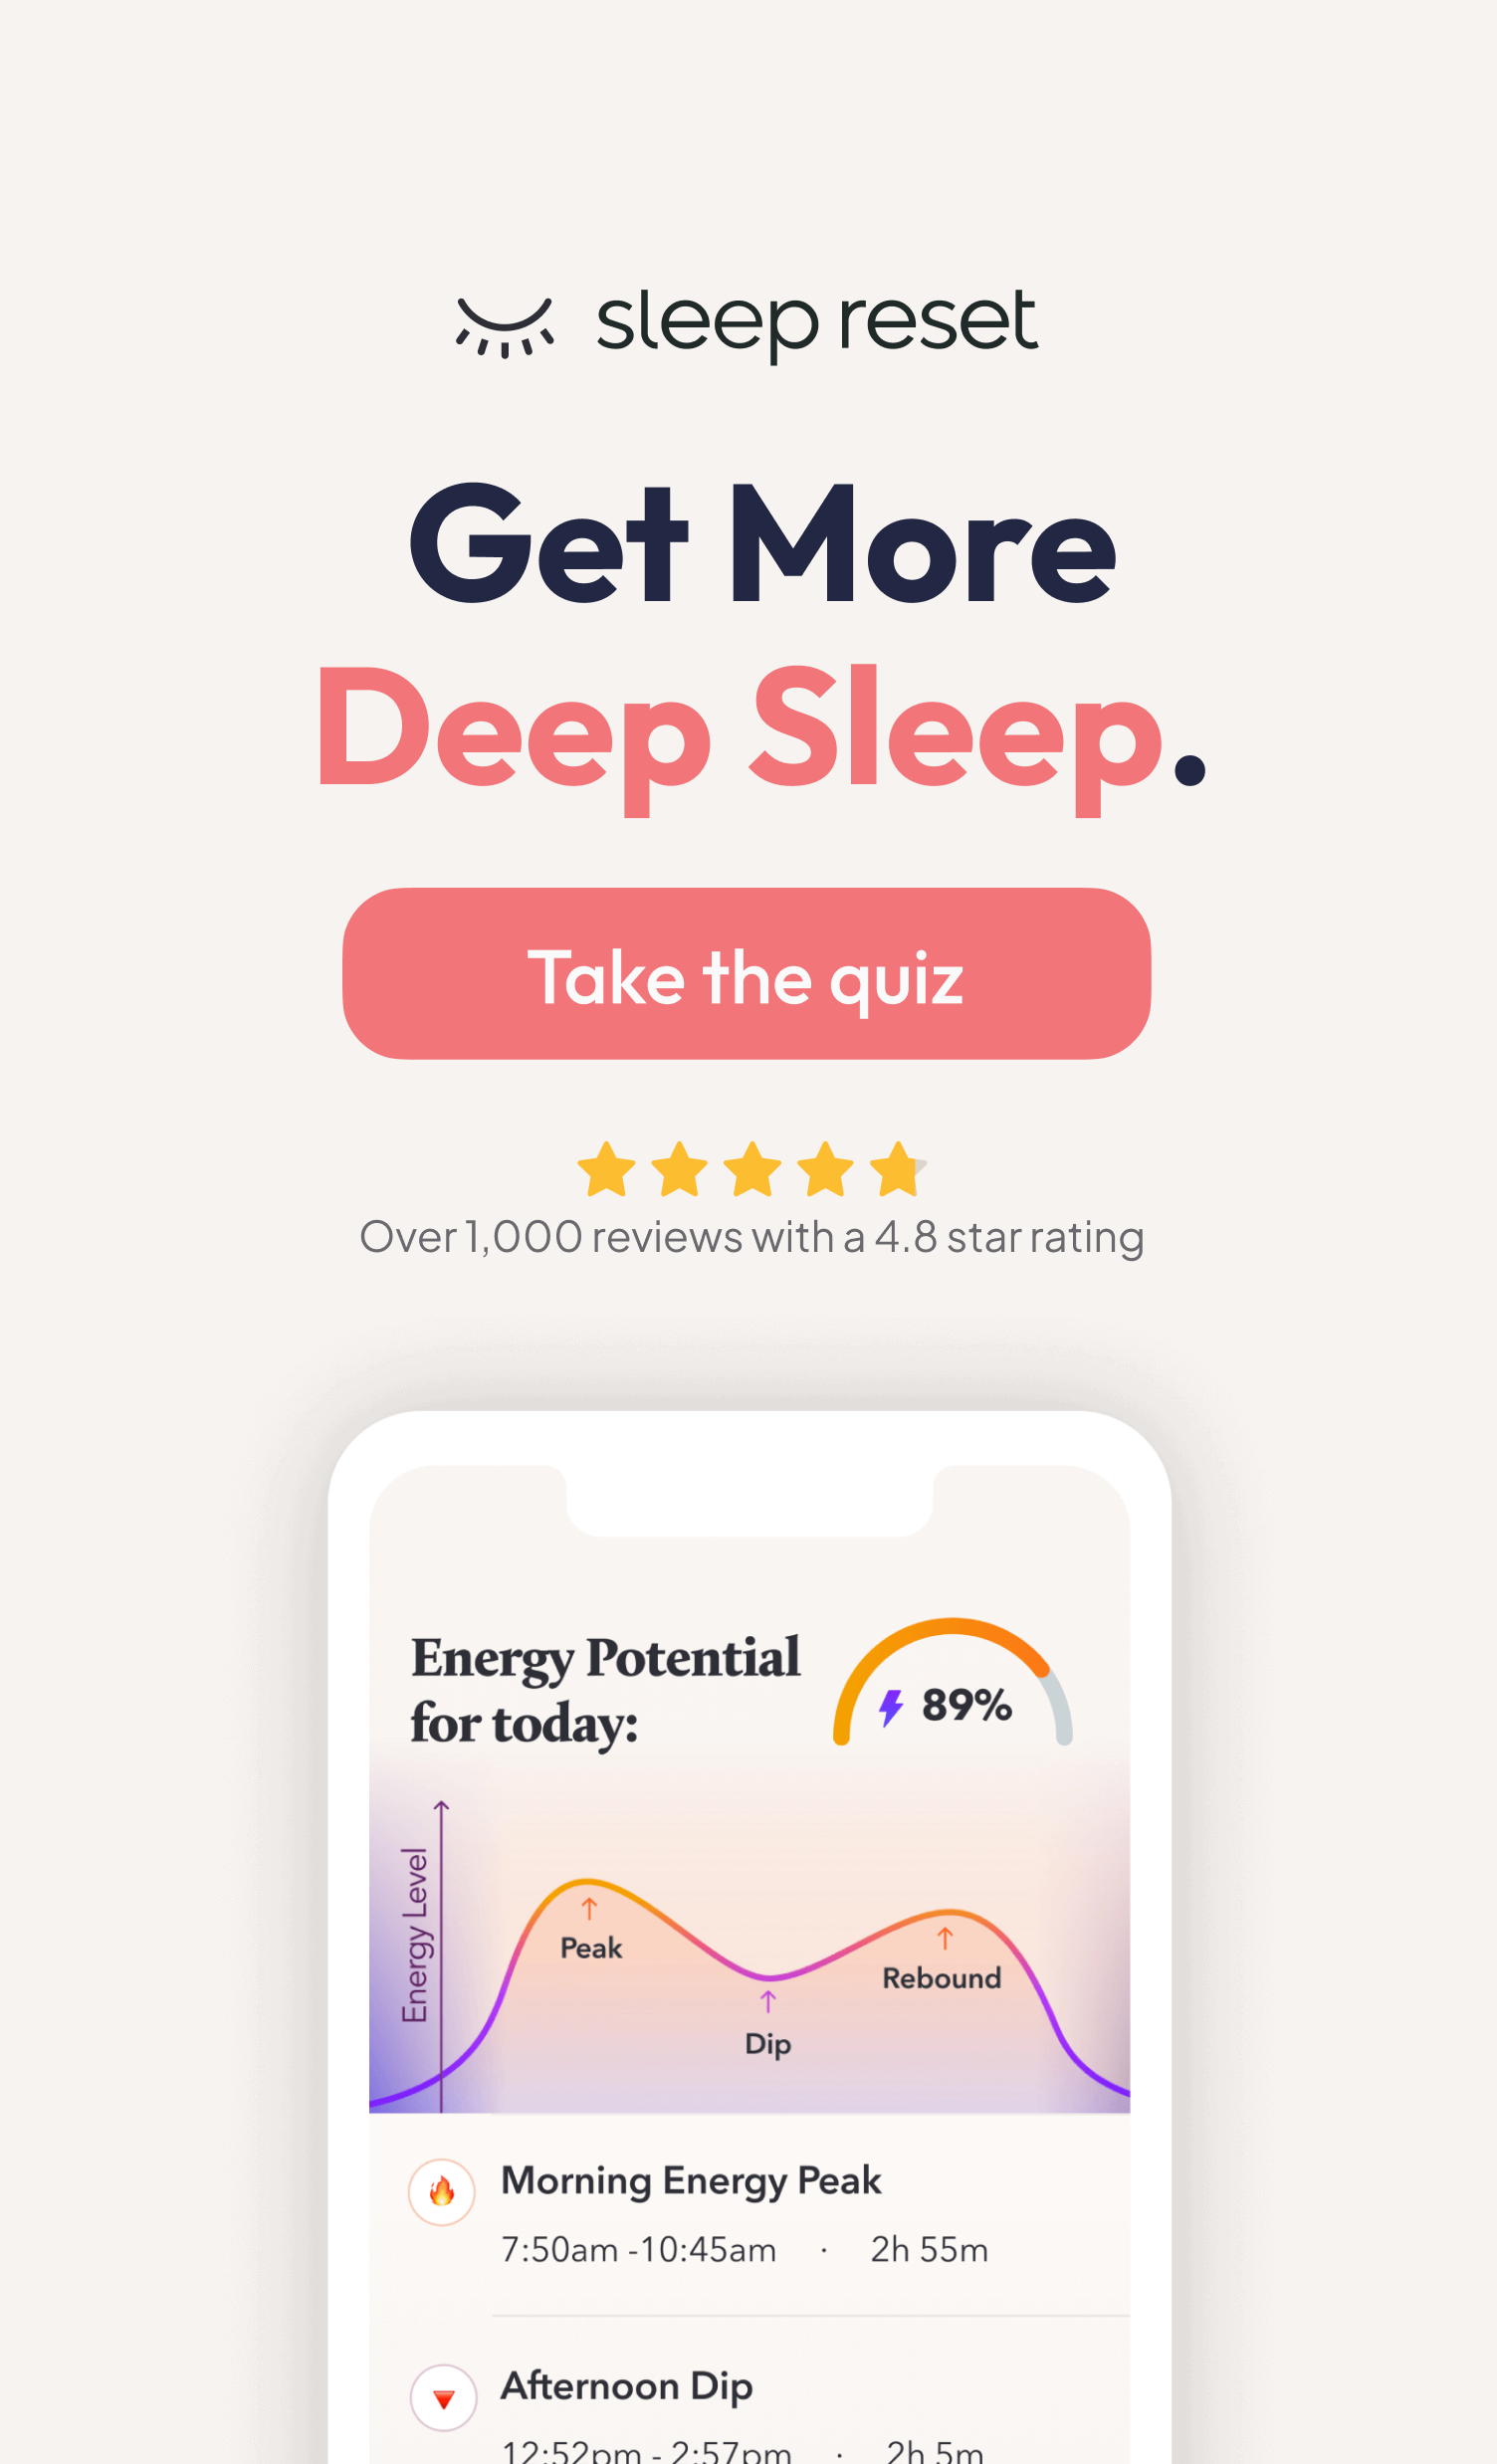 Sleep! Sleep! Sleep! - You might want to work for Google after